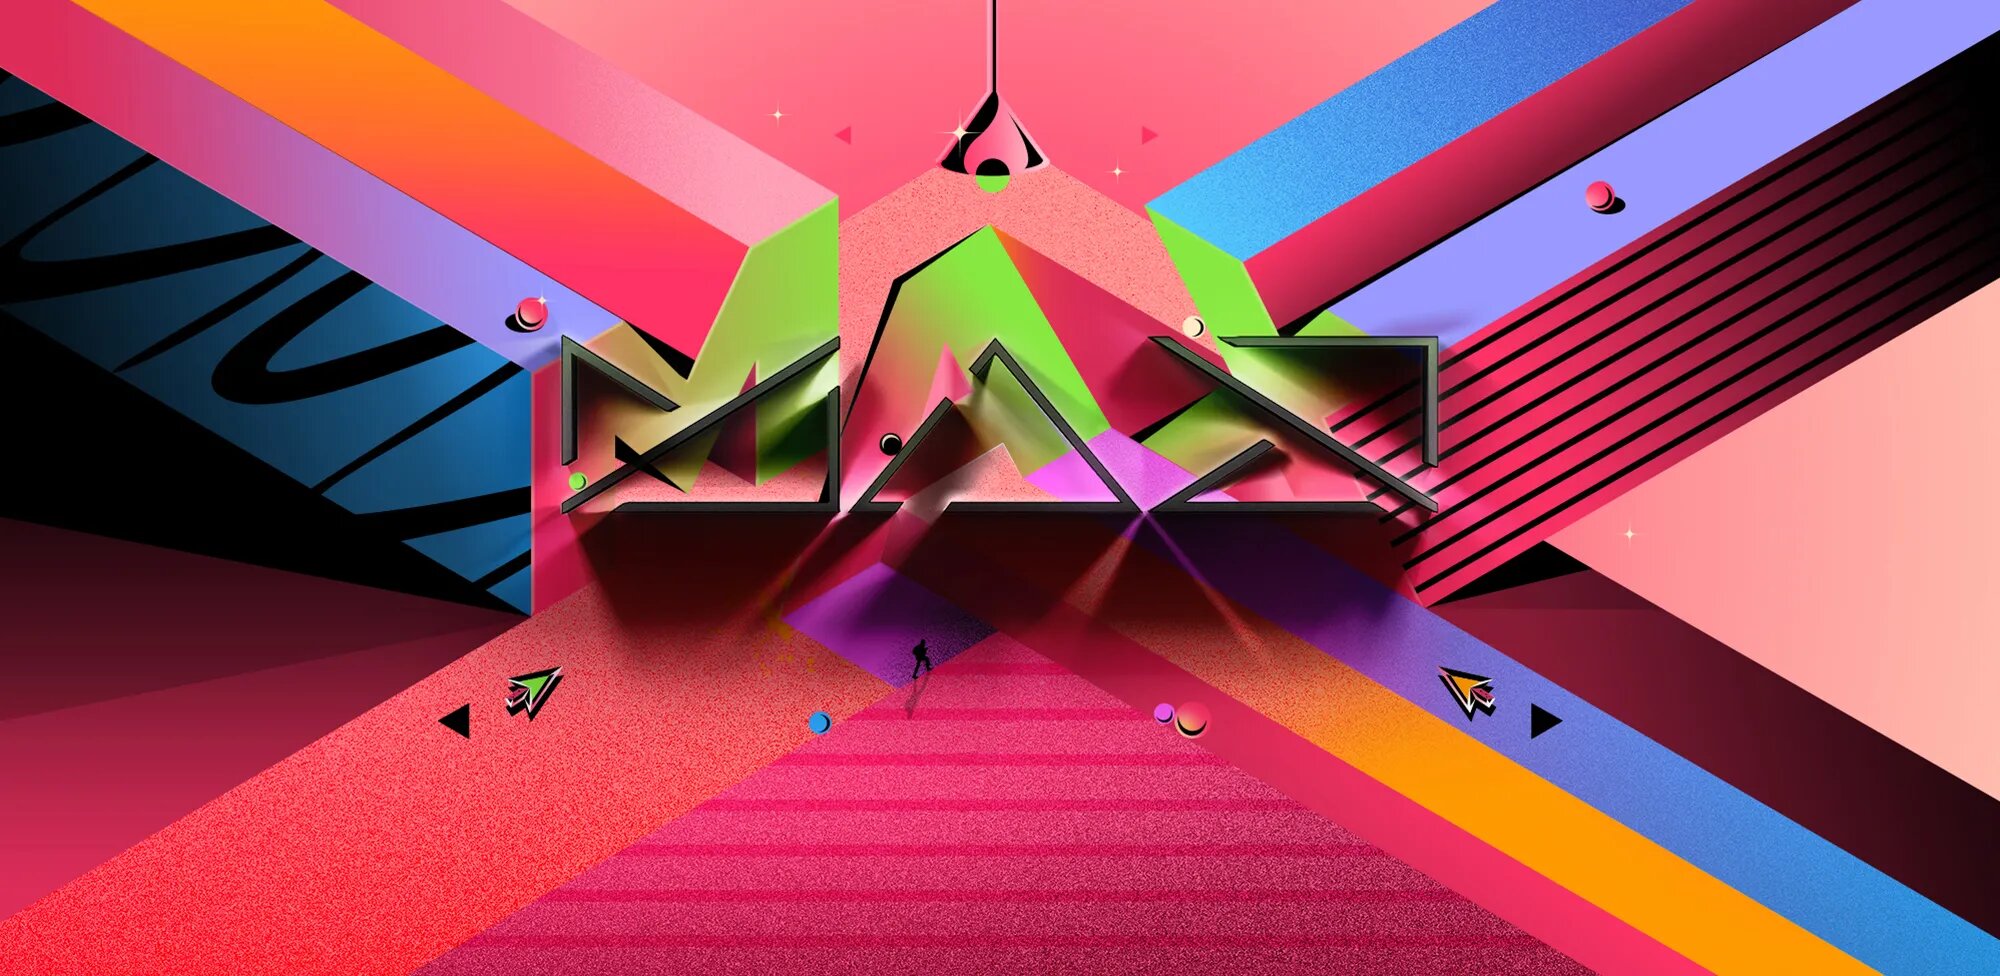 Adobe Max 2021